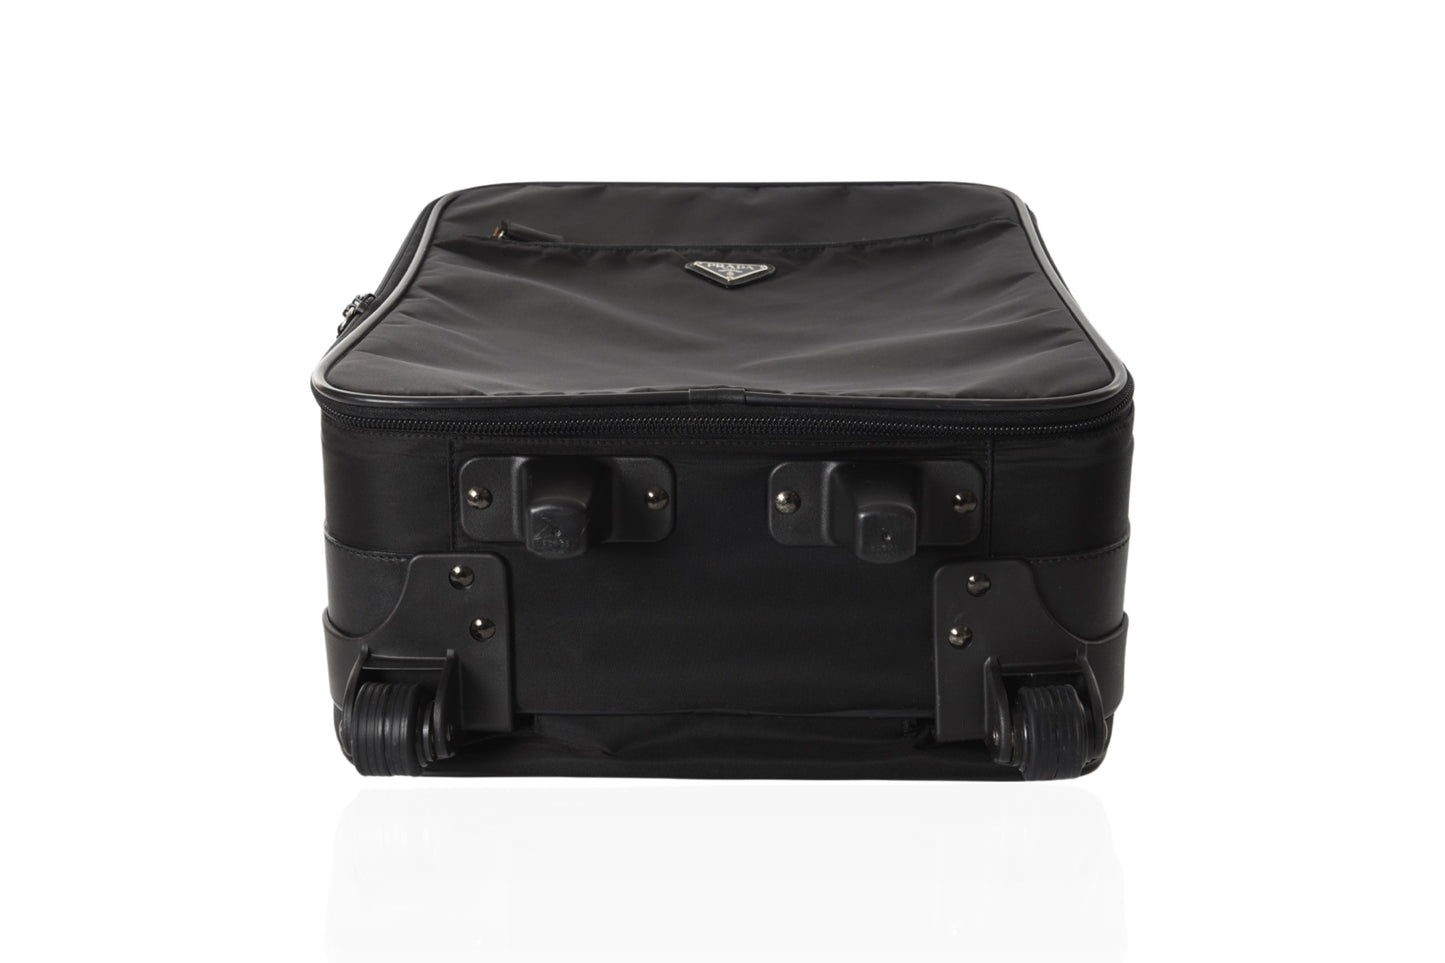 Prada Black Tessuto Nylon Leather Suitcase Rolling Travel Luggage Cabin Bag Trolley